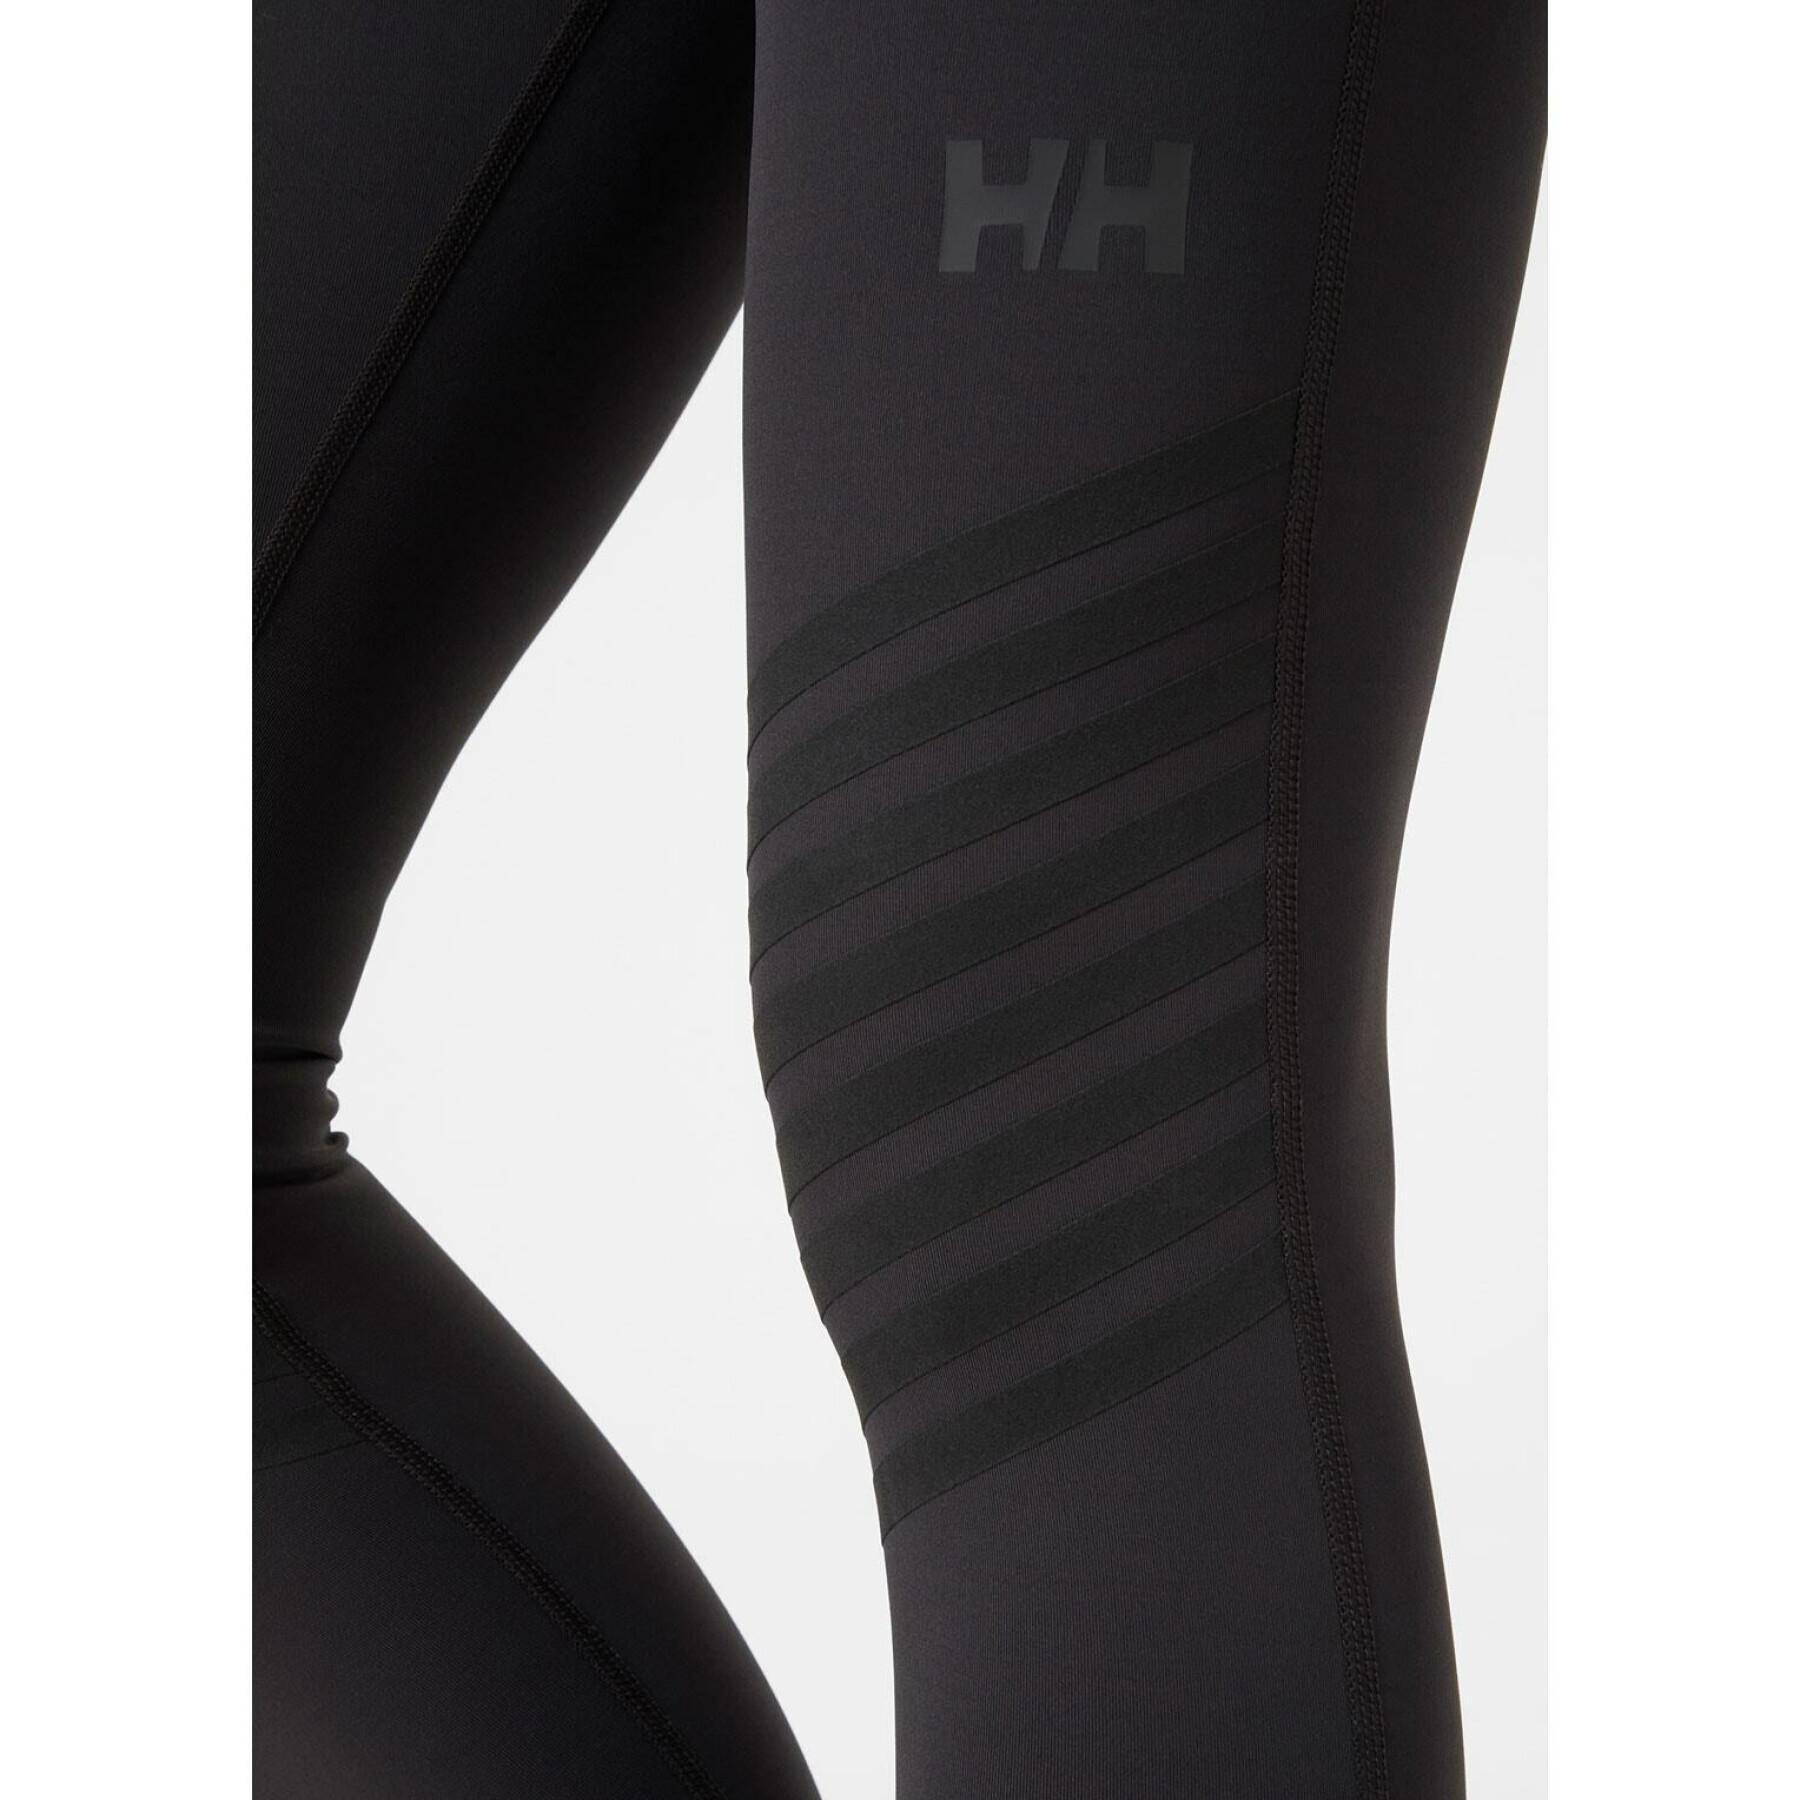 Legging woman Helly Hansen Hp Racing